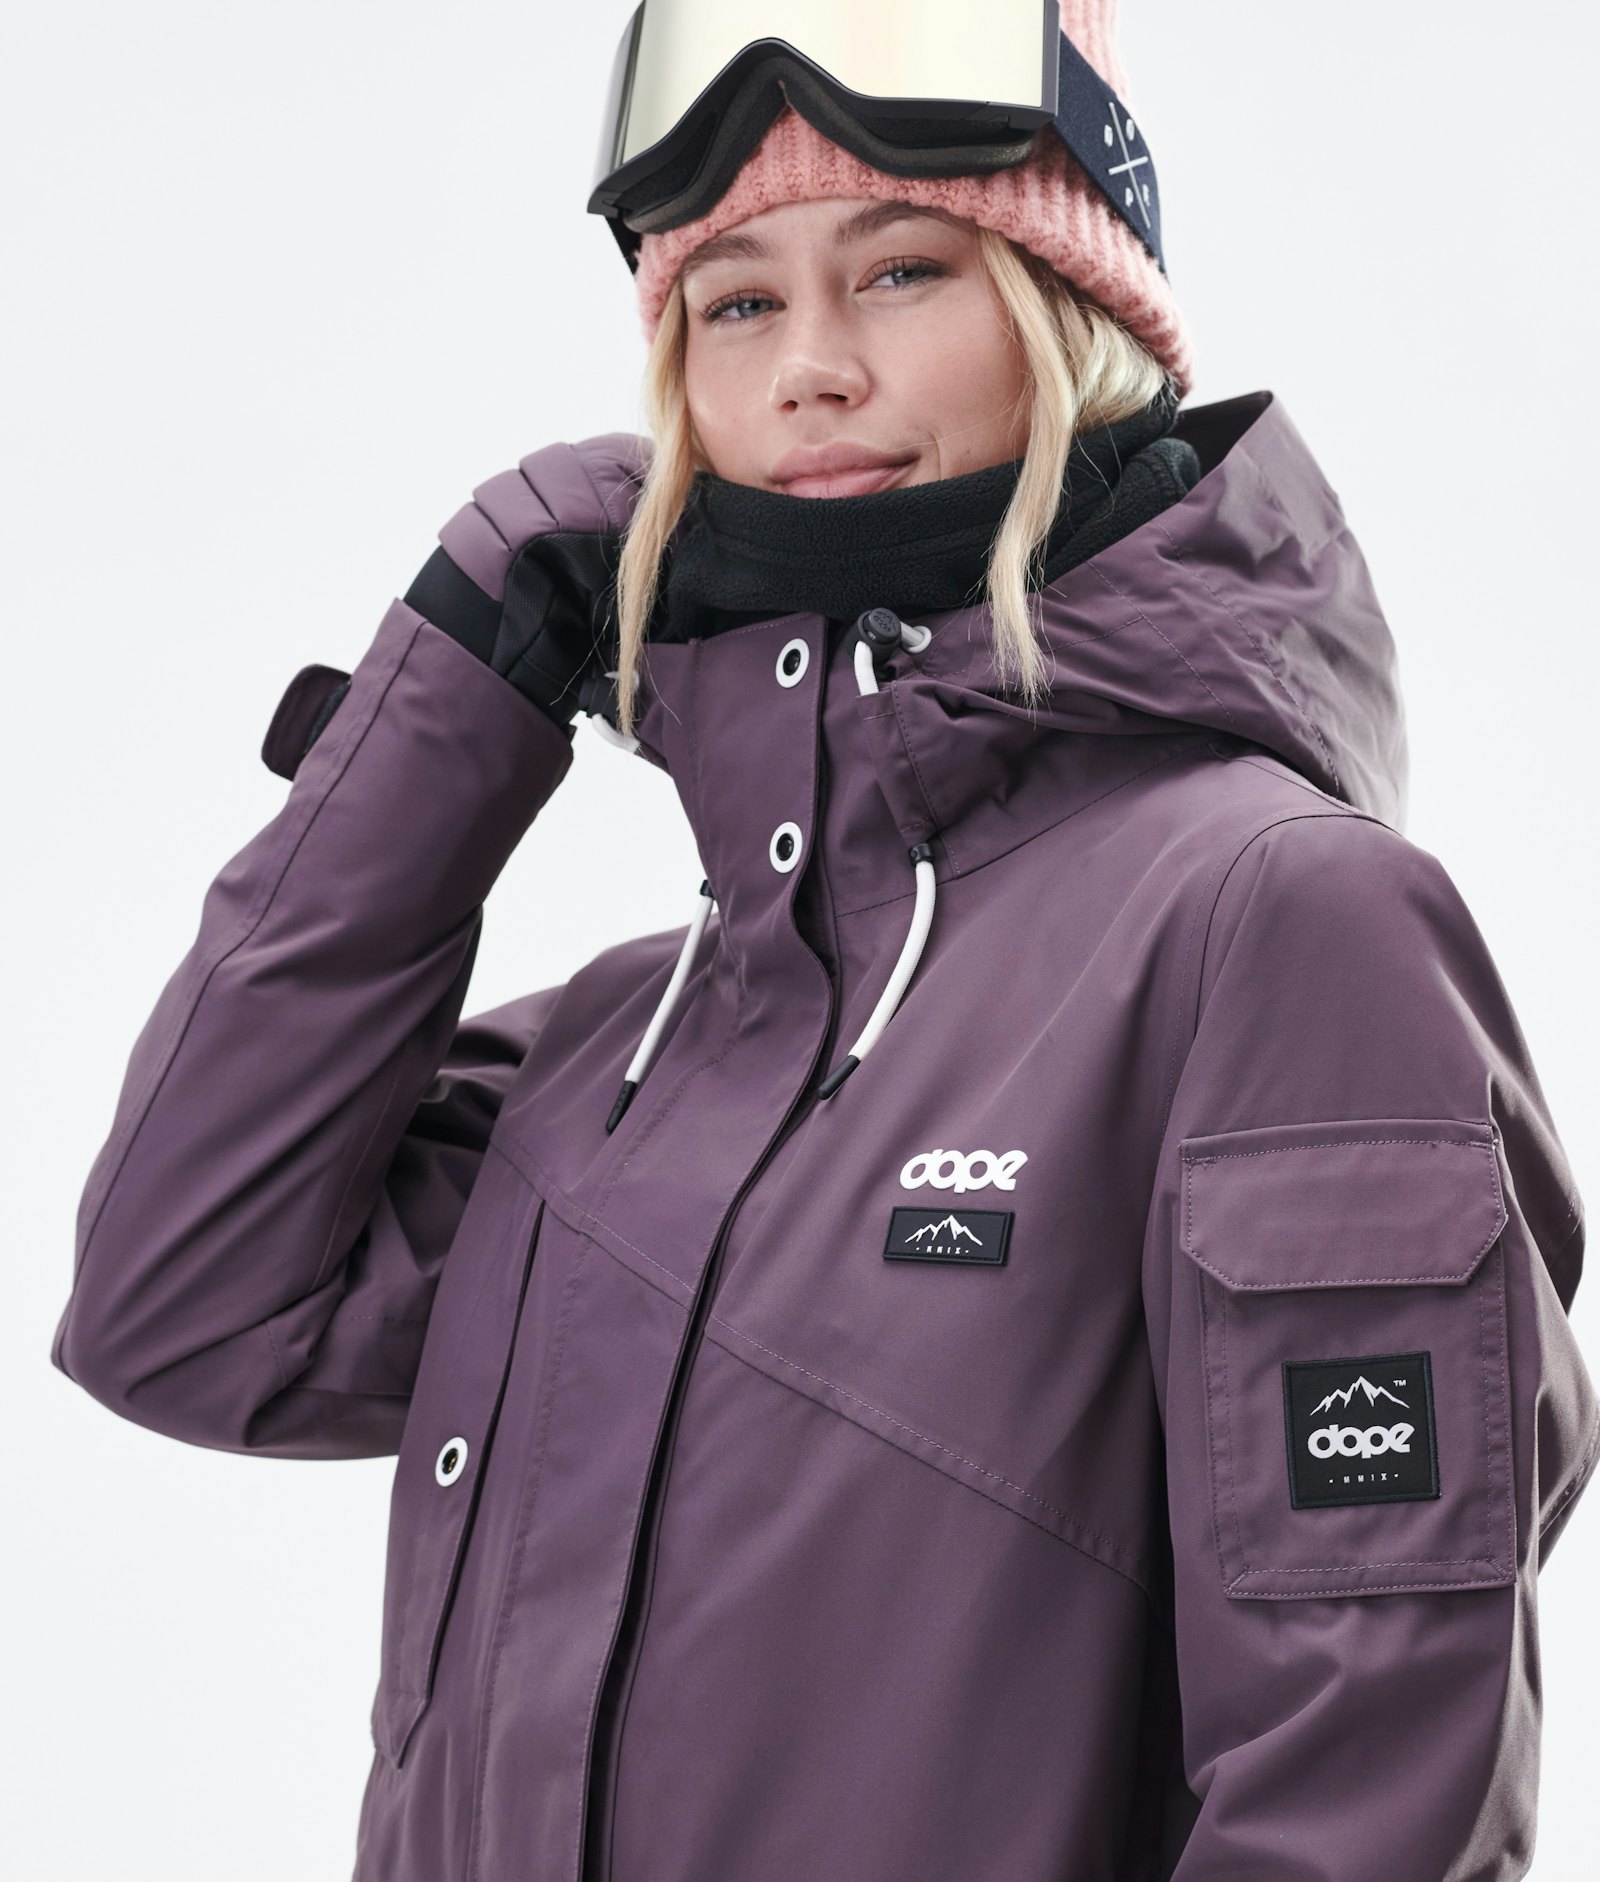 Dope Adept W 2020 Veste Snowboard Femme Faded Grape